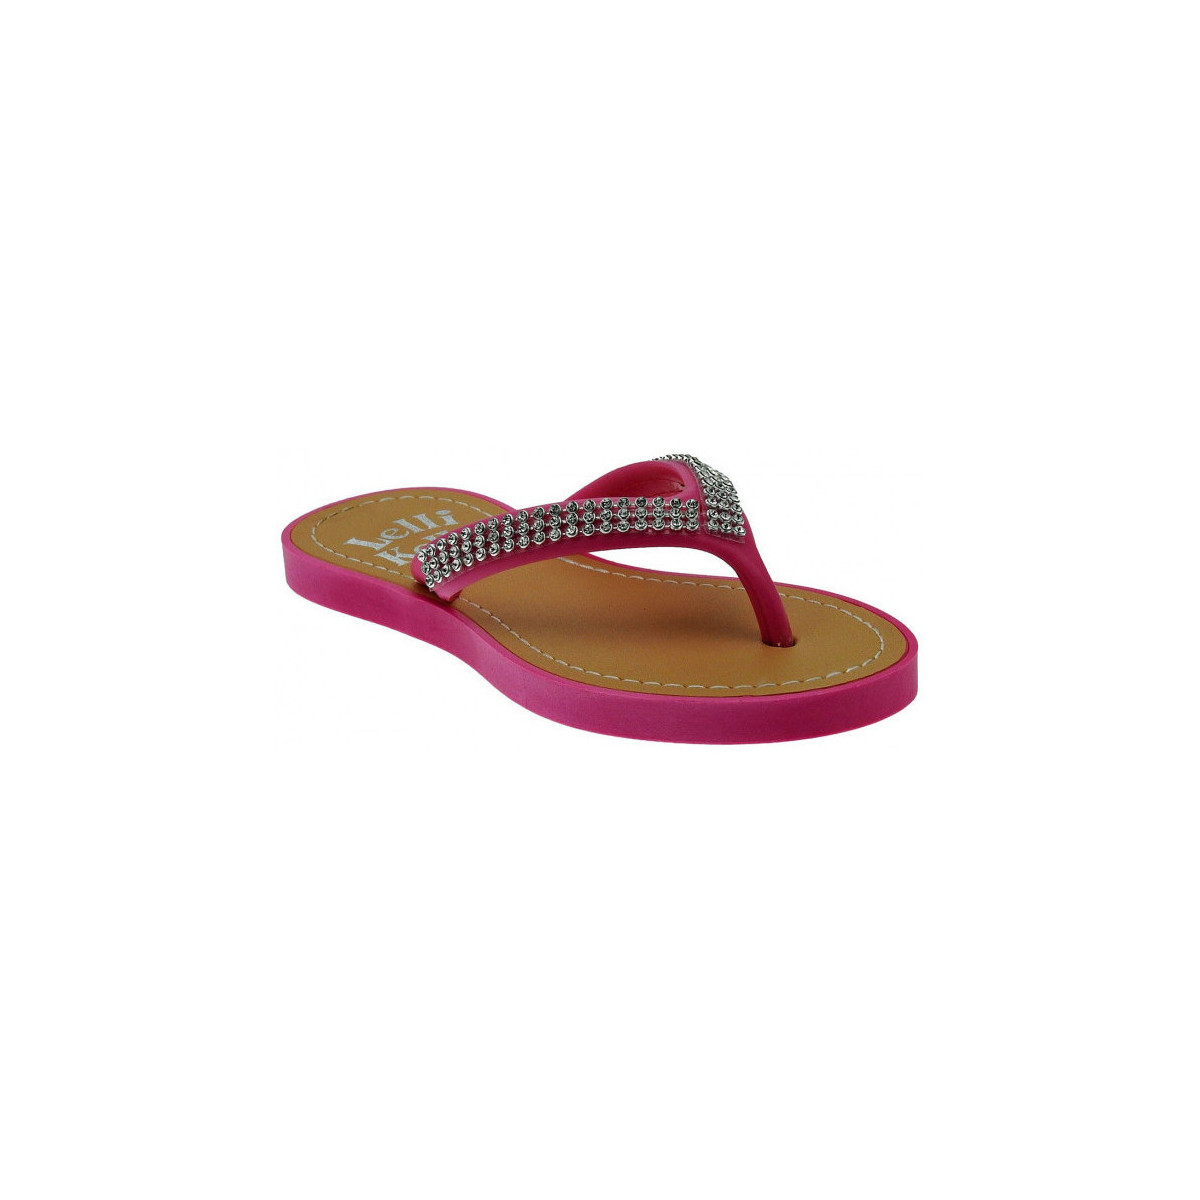 Pantofi Copii Sneakers Lelli Kelly Capri roz